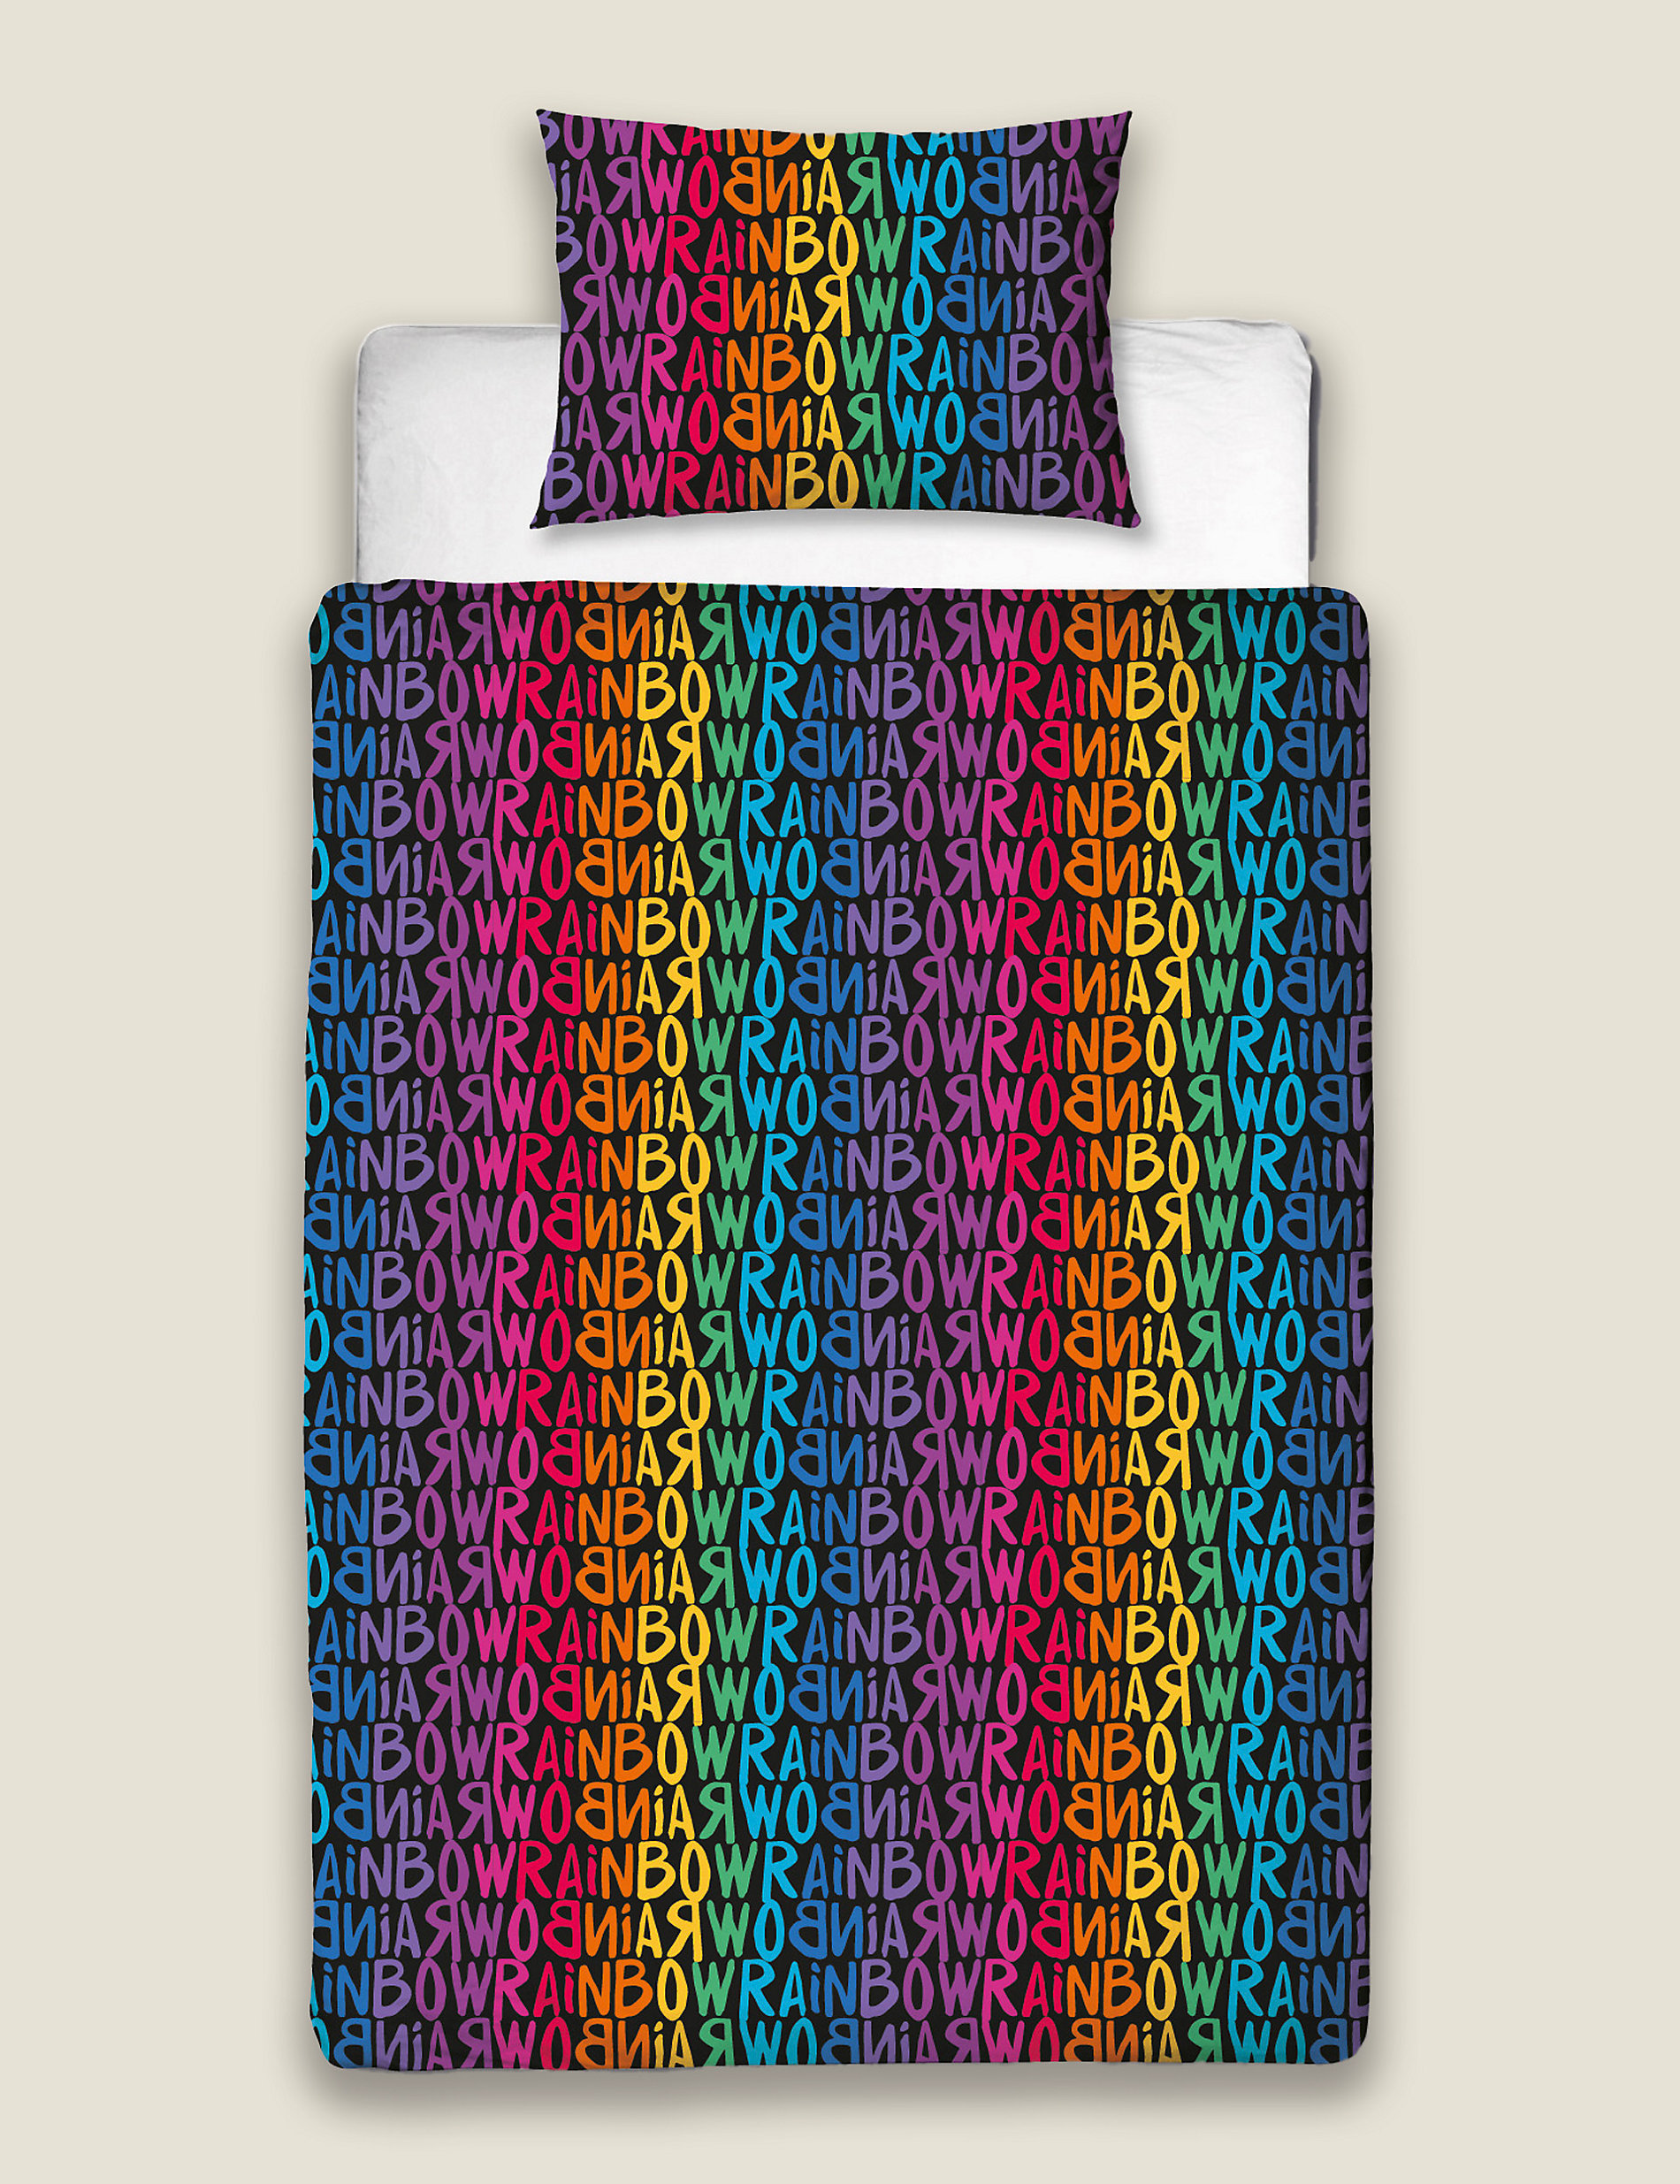 Cotton Blend Rainbow High™ Single Bedding Set